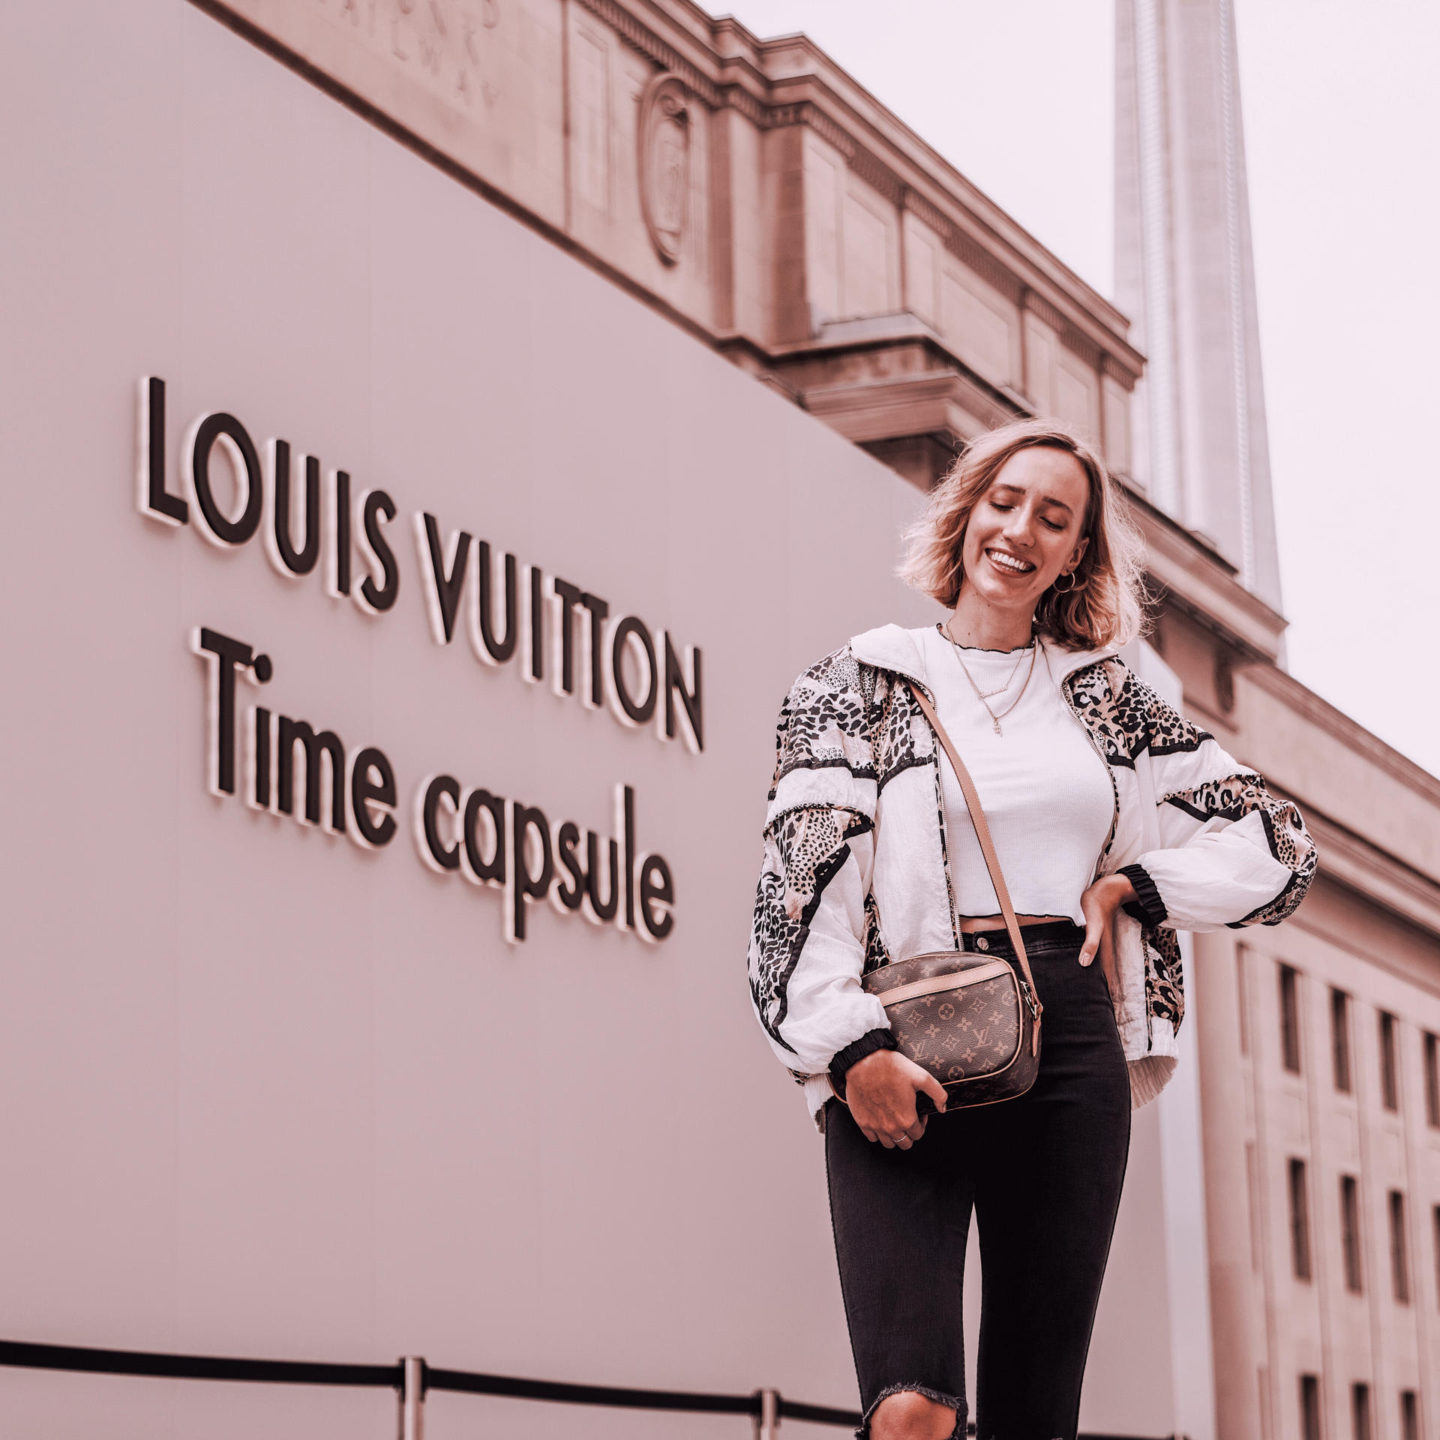 Louis Vuitton | Inside The Time Capsule Exhibition